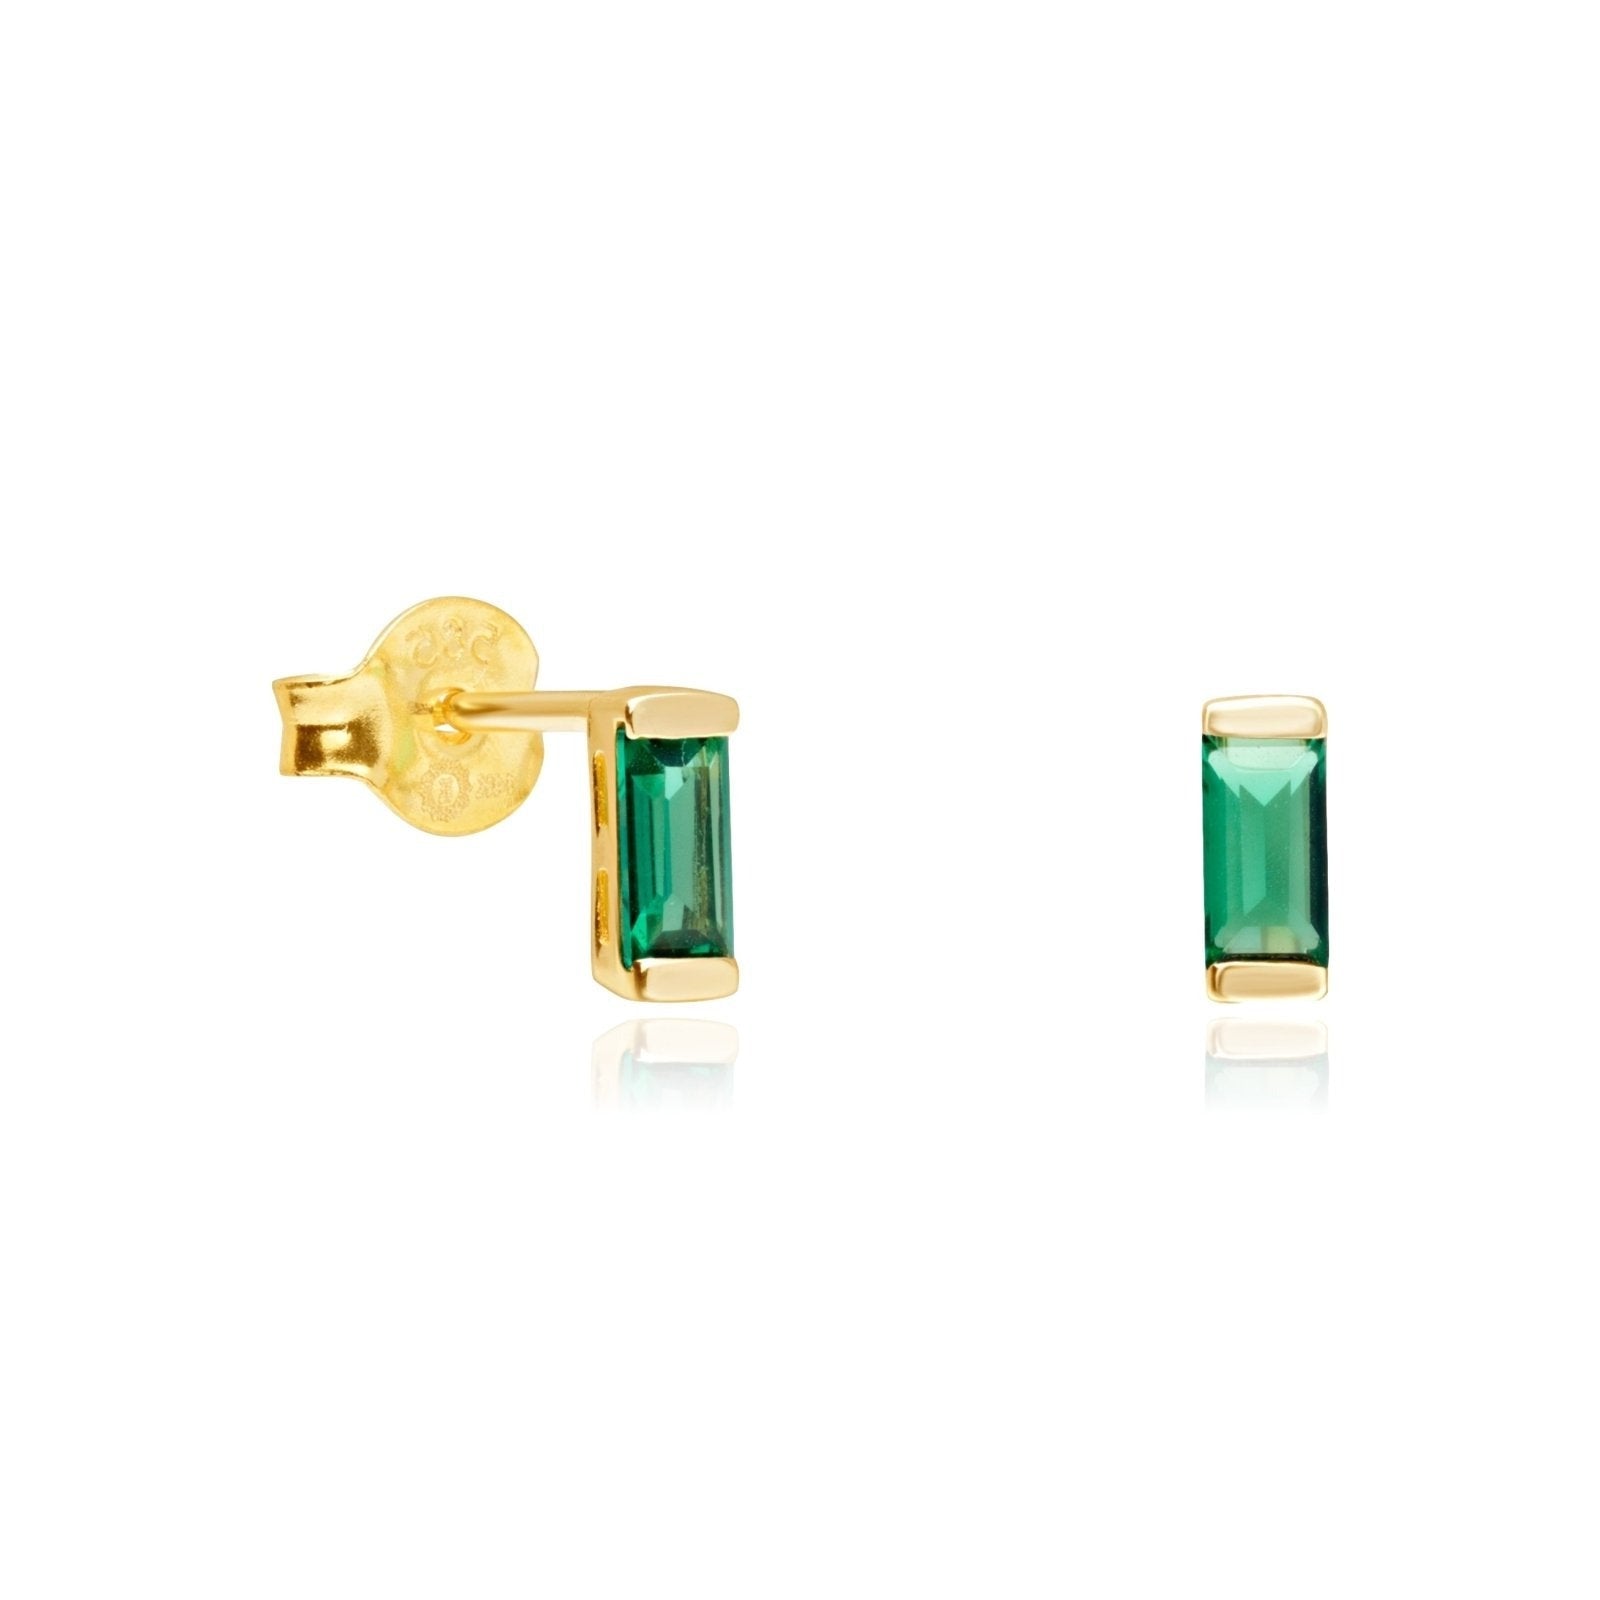 Emerald Baguette Stud Earrings Earrings Estella Collection #product_description# 14k Birthstone Earrings #tag4# #tag5# #tag6# #tag7# #tag8# #tag9# #tag10#